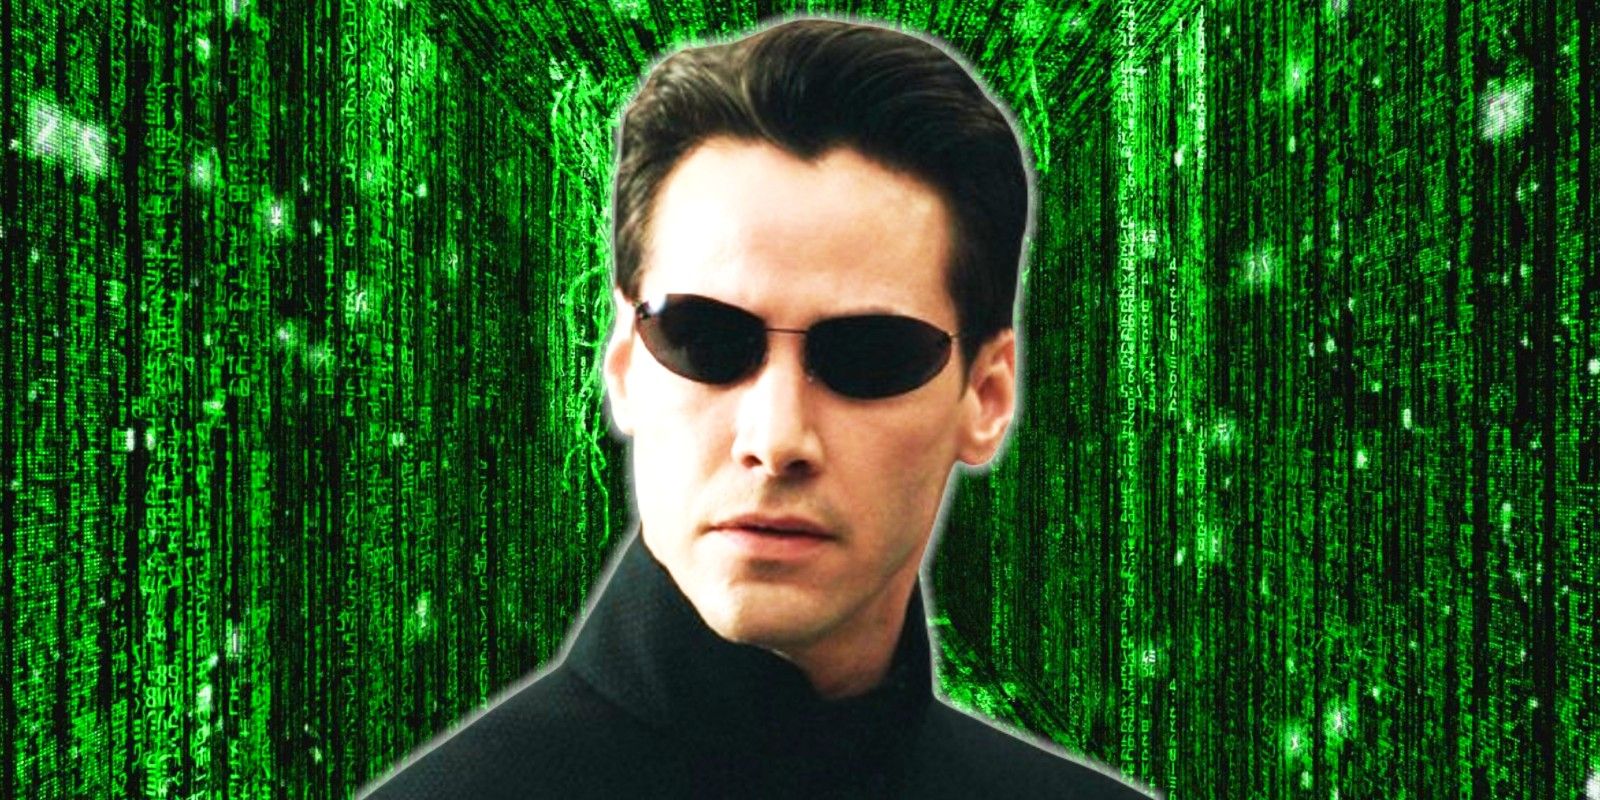 Keanu Reeves as Neo with Matrix code behind him